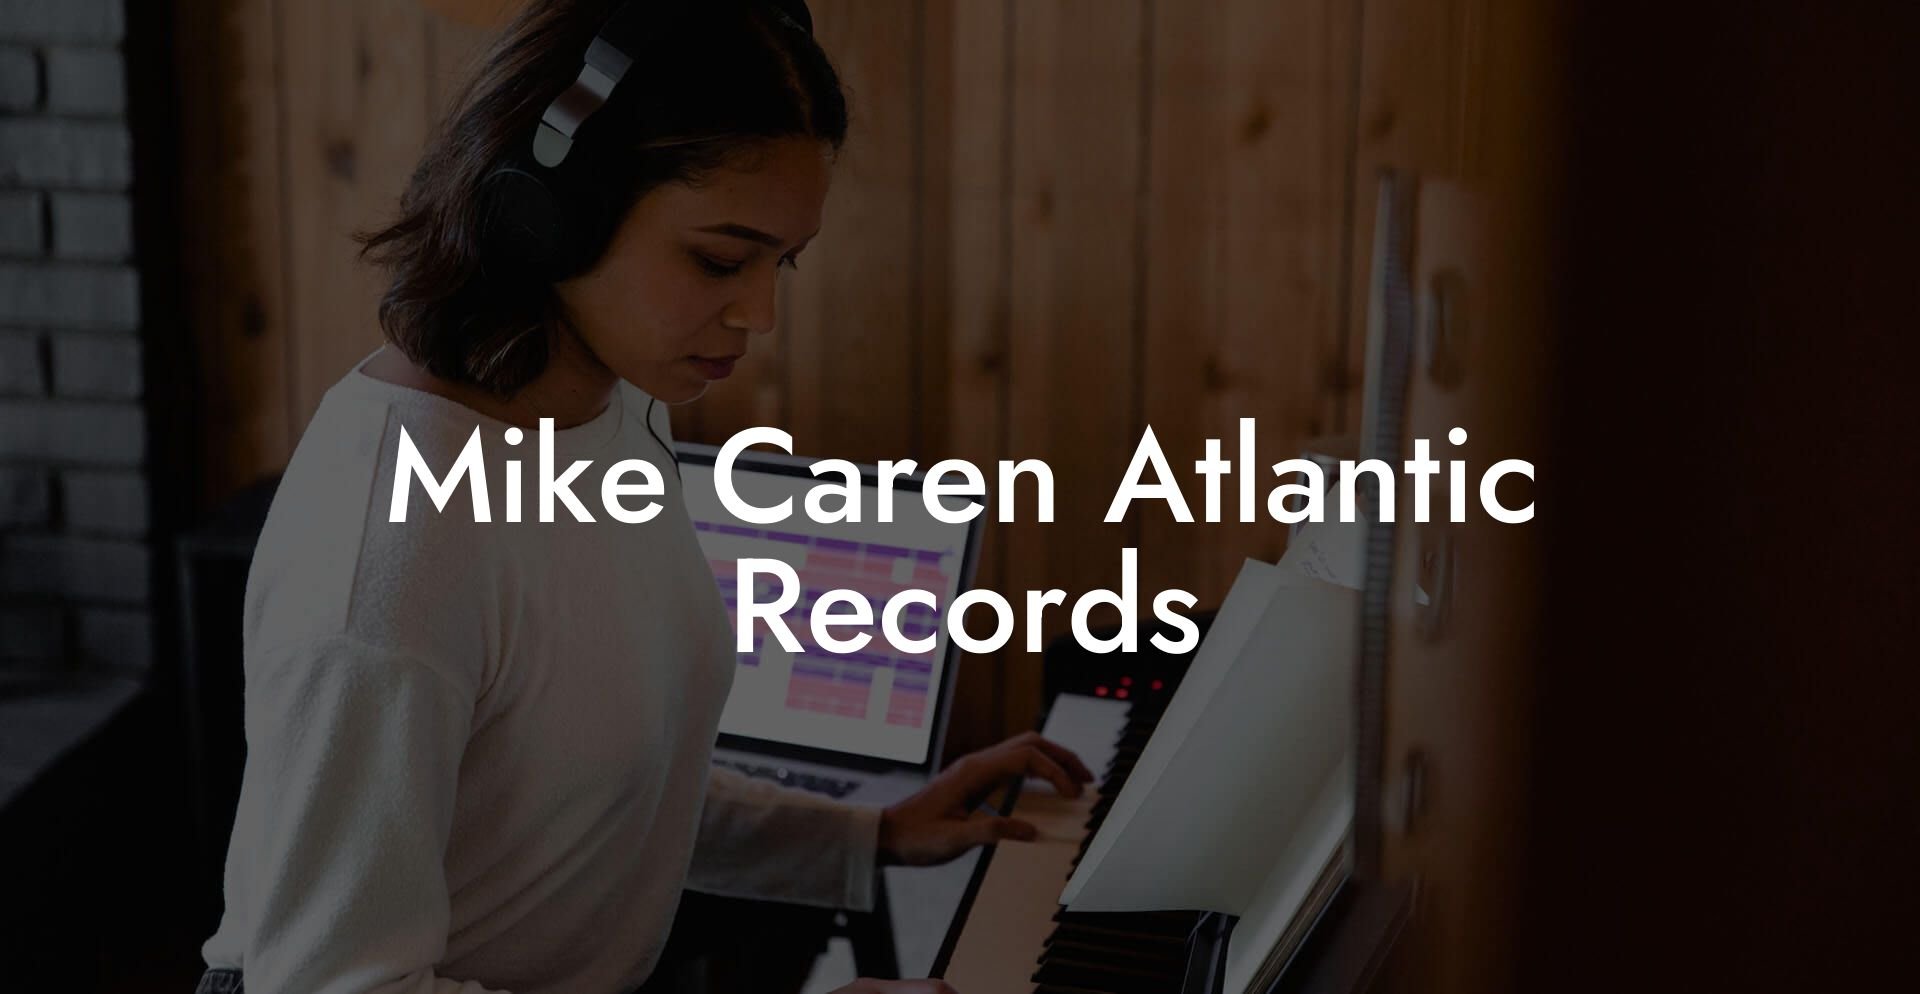 Mike Caren Atlantic Records